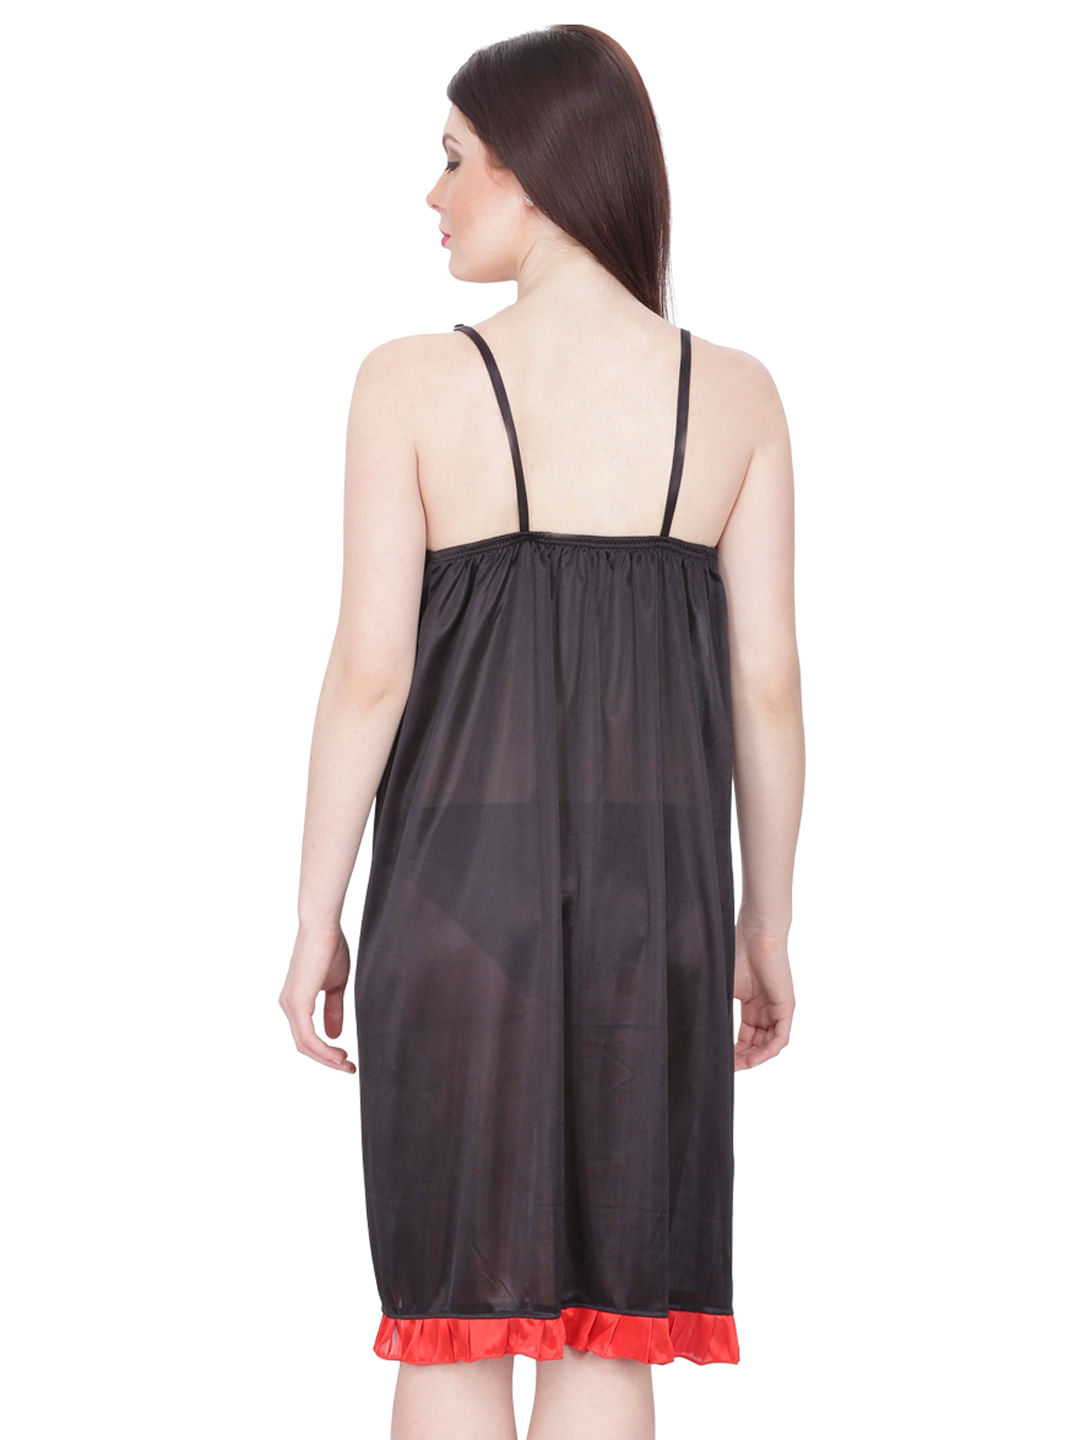 Satin Babydoll Dress (Black, Free Size)